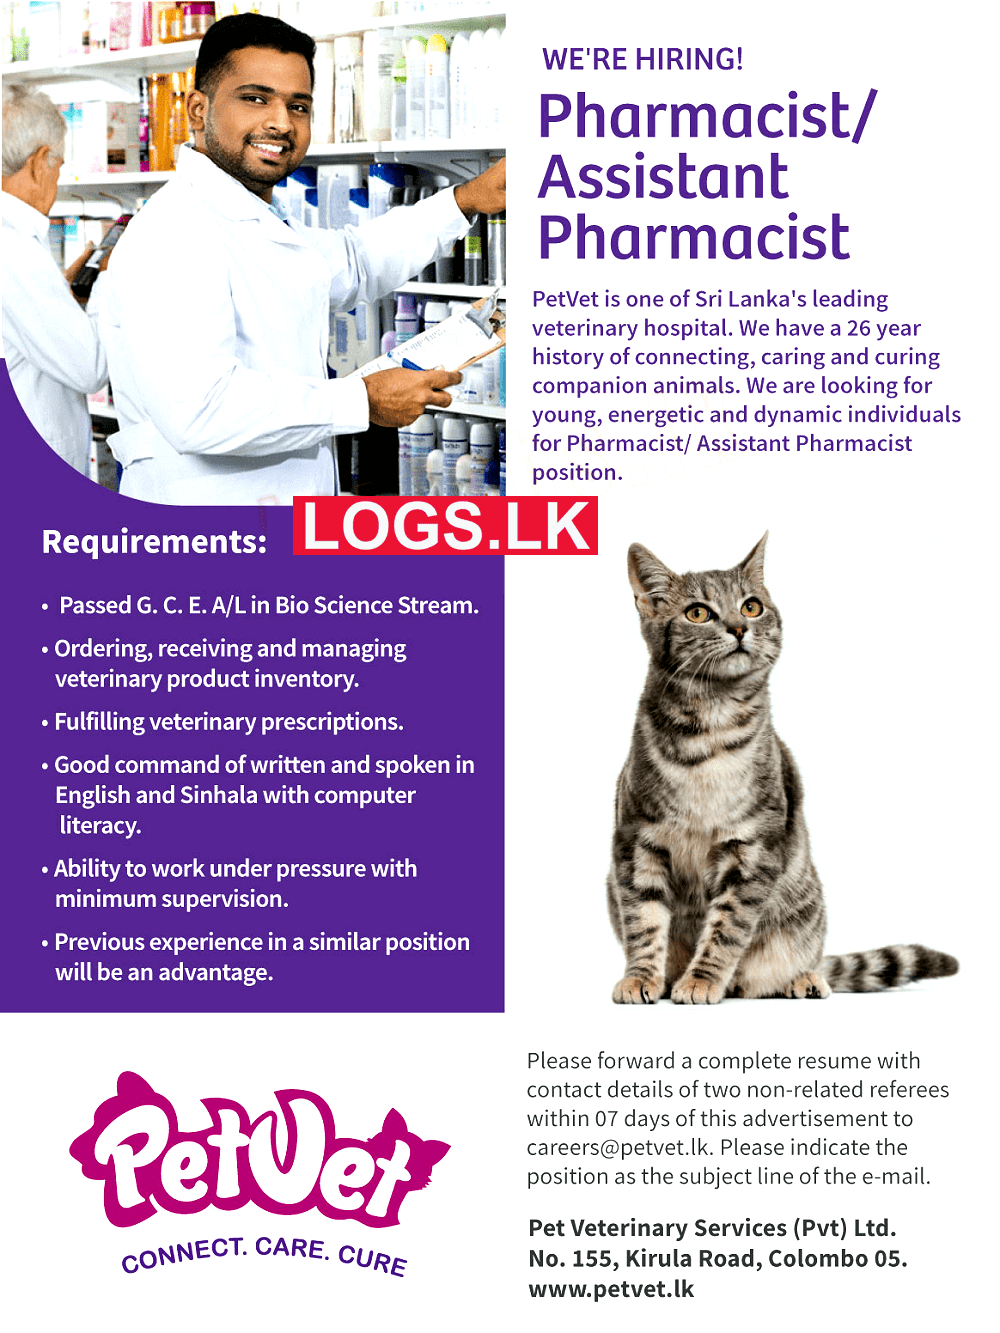 Pharmacist / Assistant Pharmacist Vacancy at Pet Veterinary Services Job Vacancies